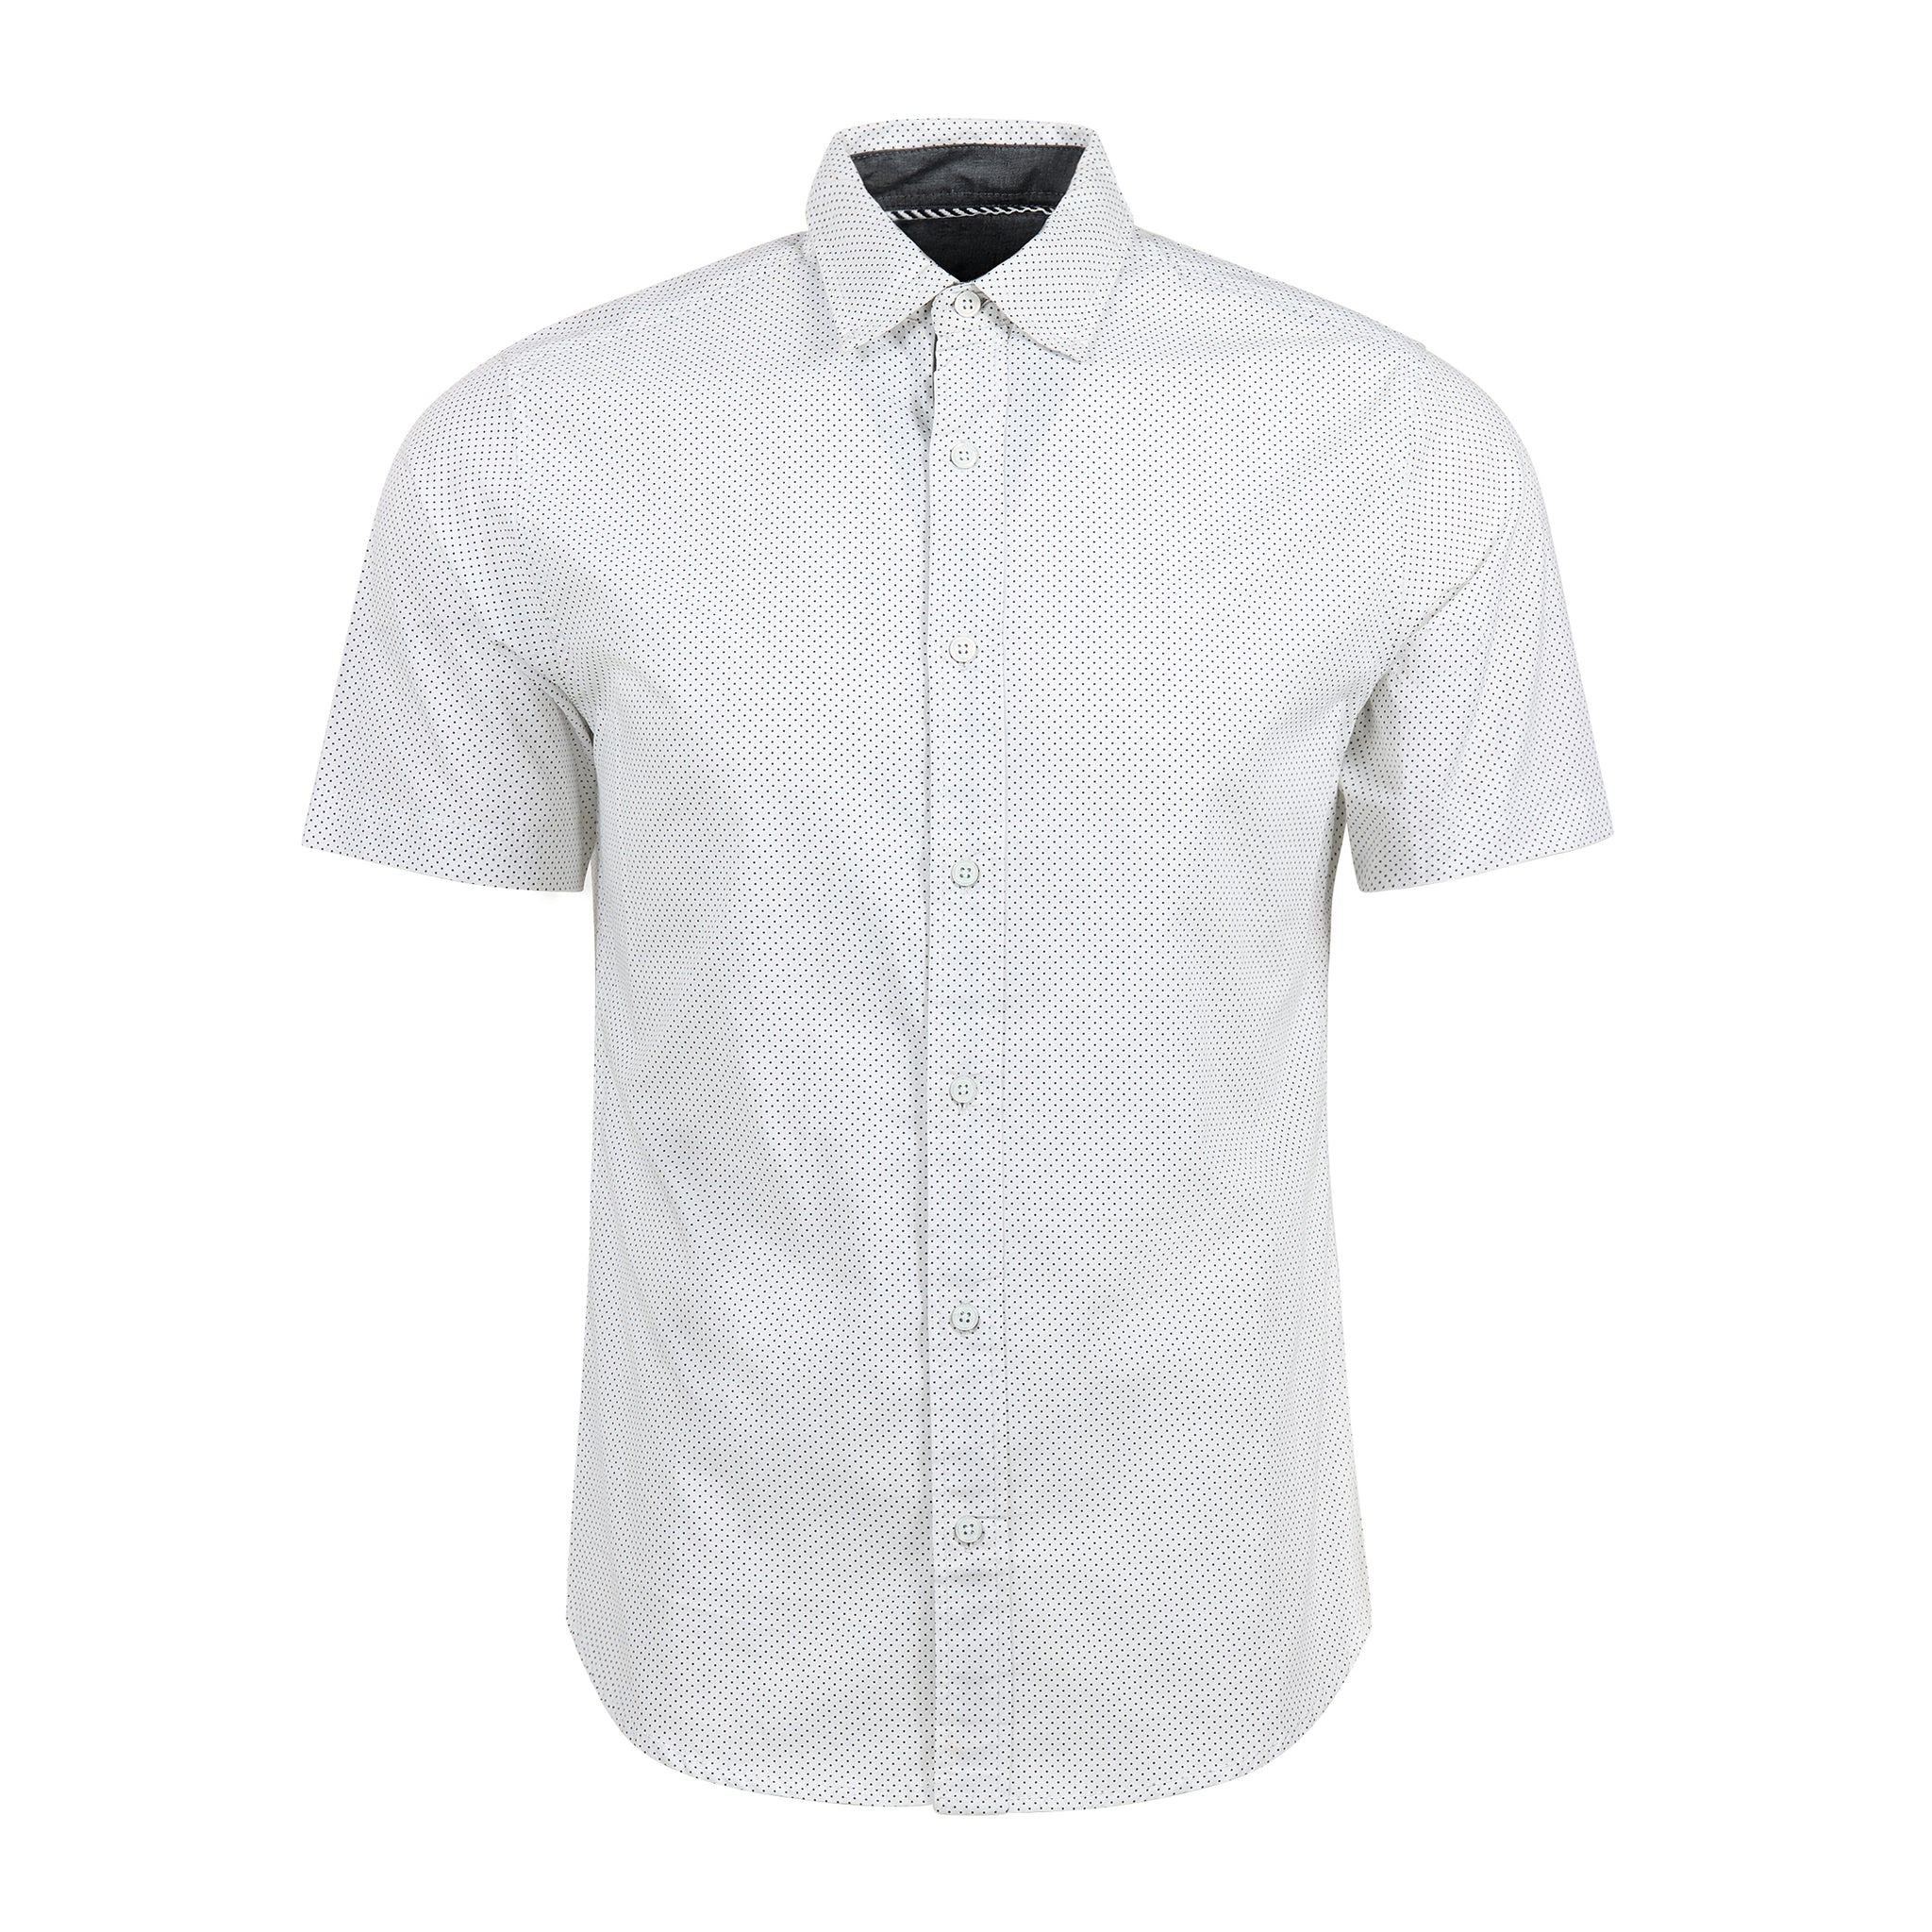 The Minimal LaBrea Premium Men's Button Down Shirt